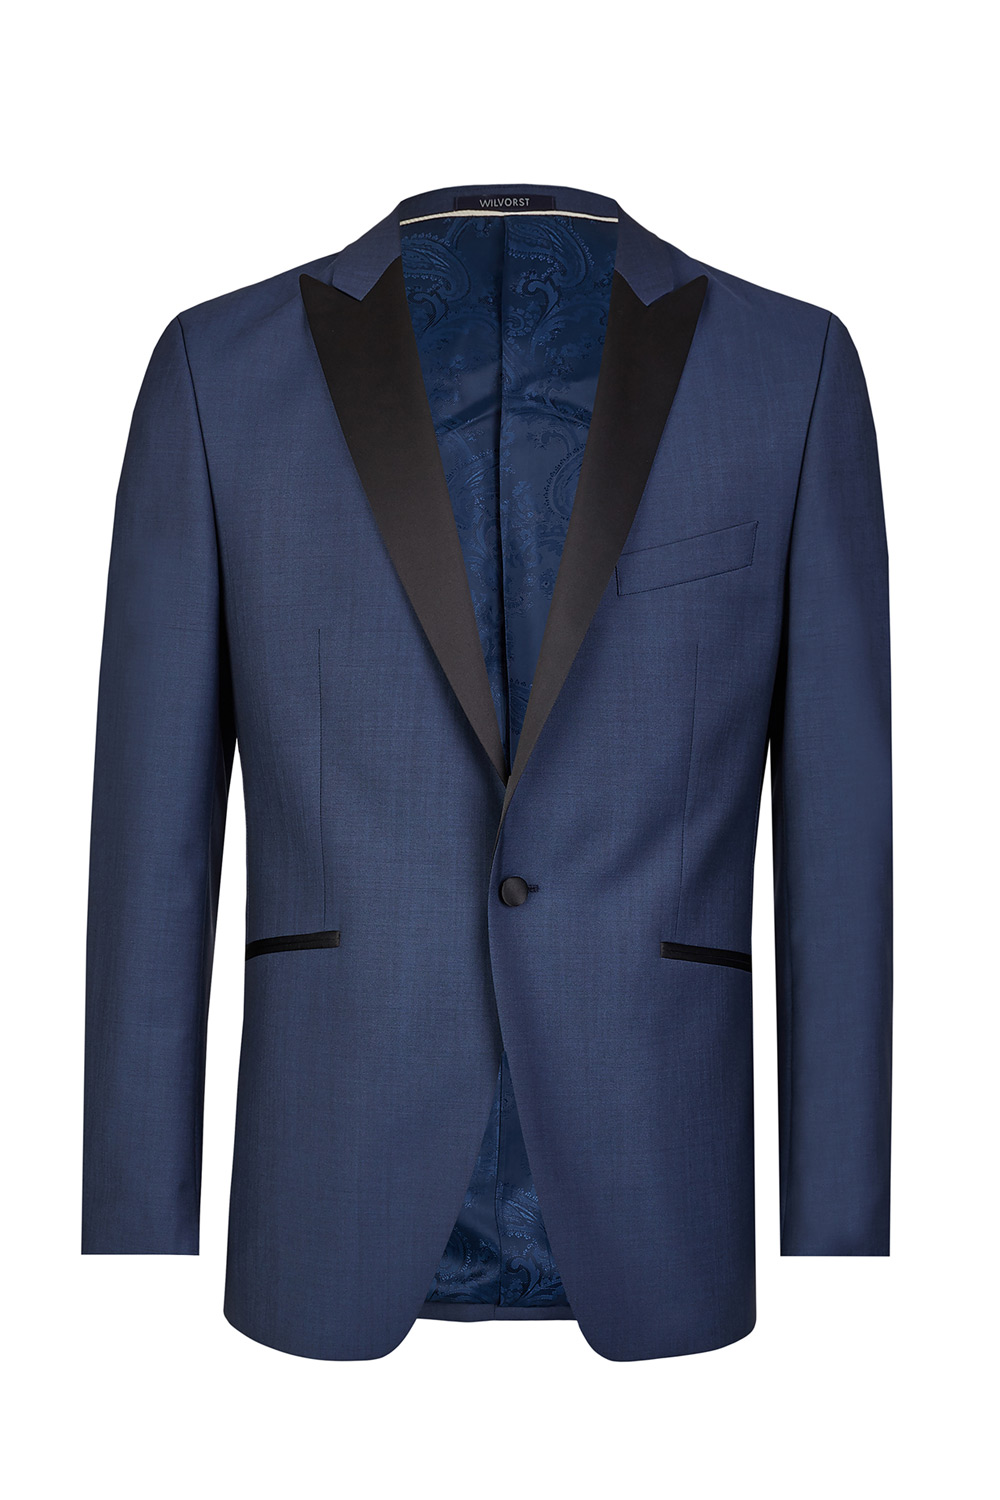 Blue Mohair Tuxedo - Tom Murphy's Formal and Menswear